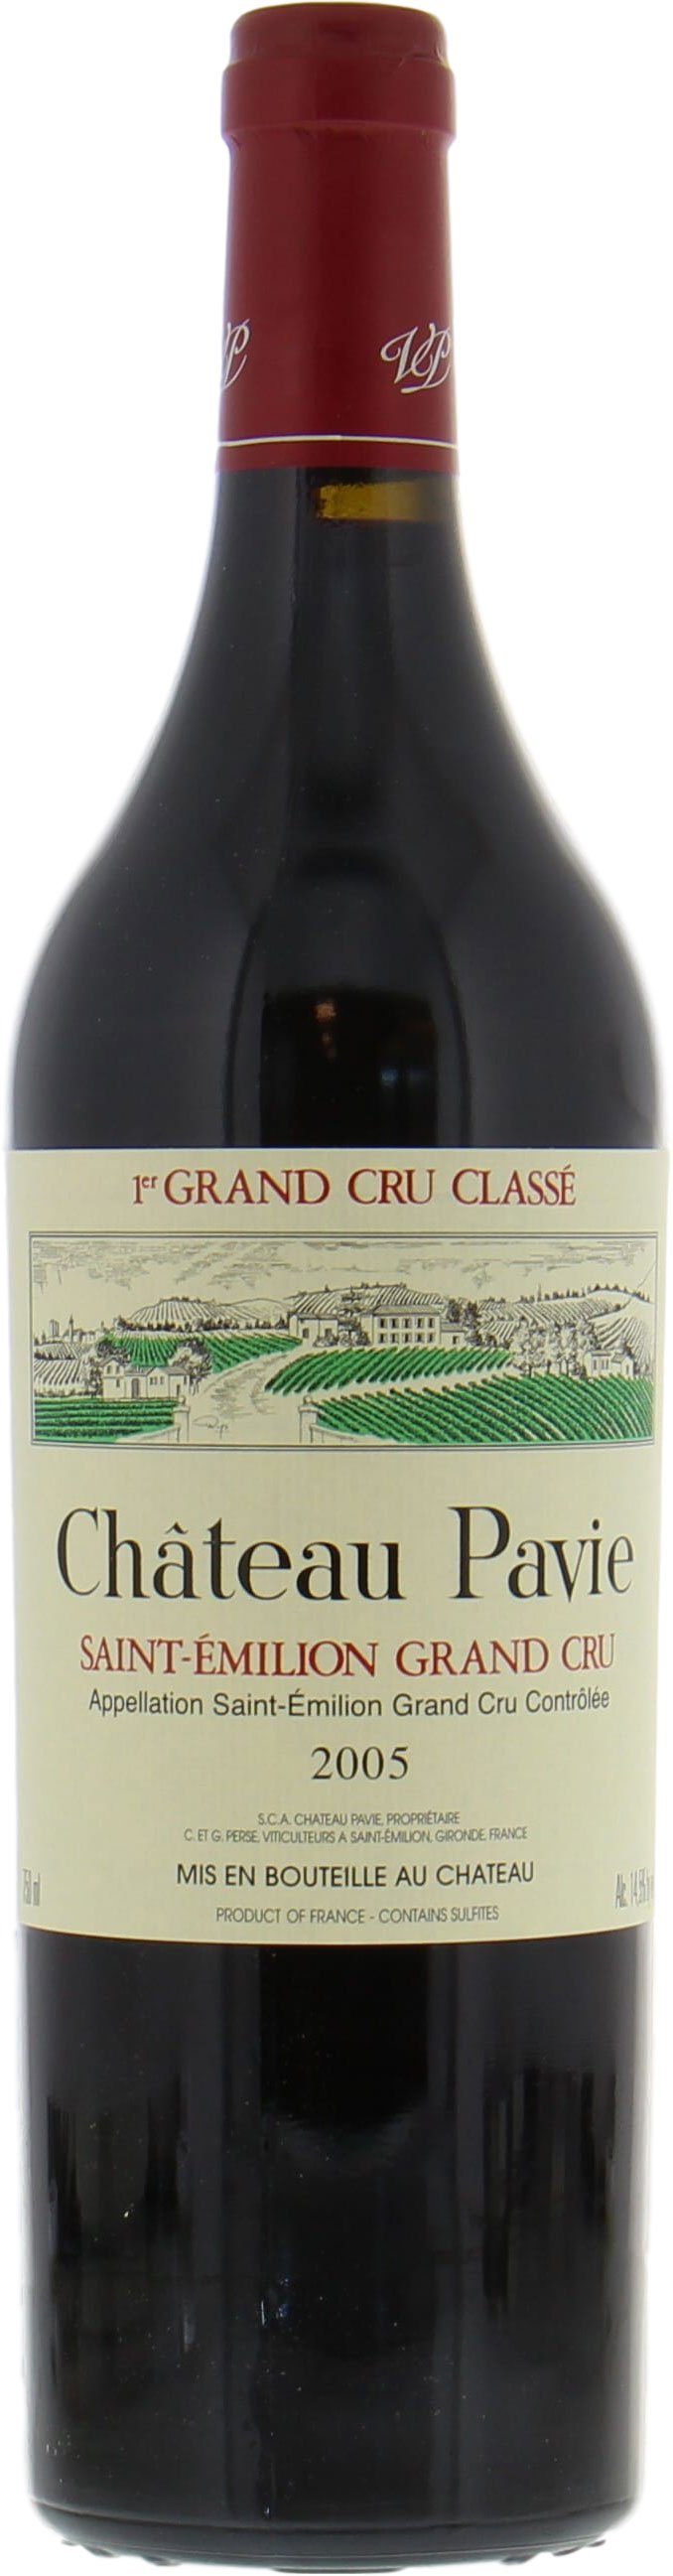 Chateau Pavie - Chateau Pavie 2005 Perfect